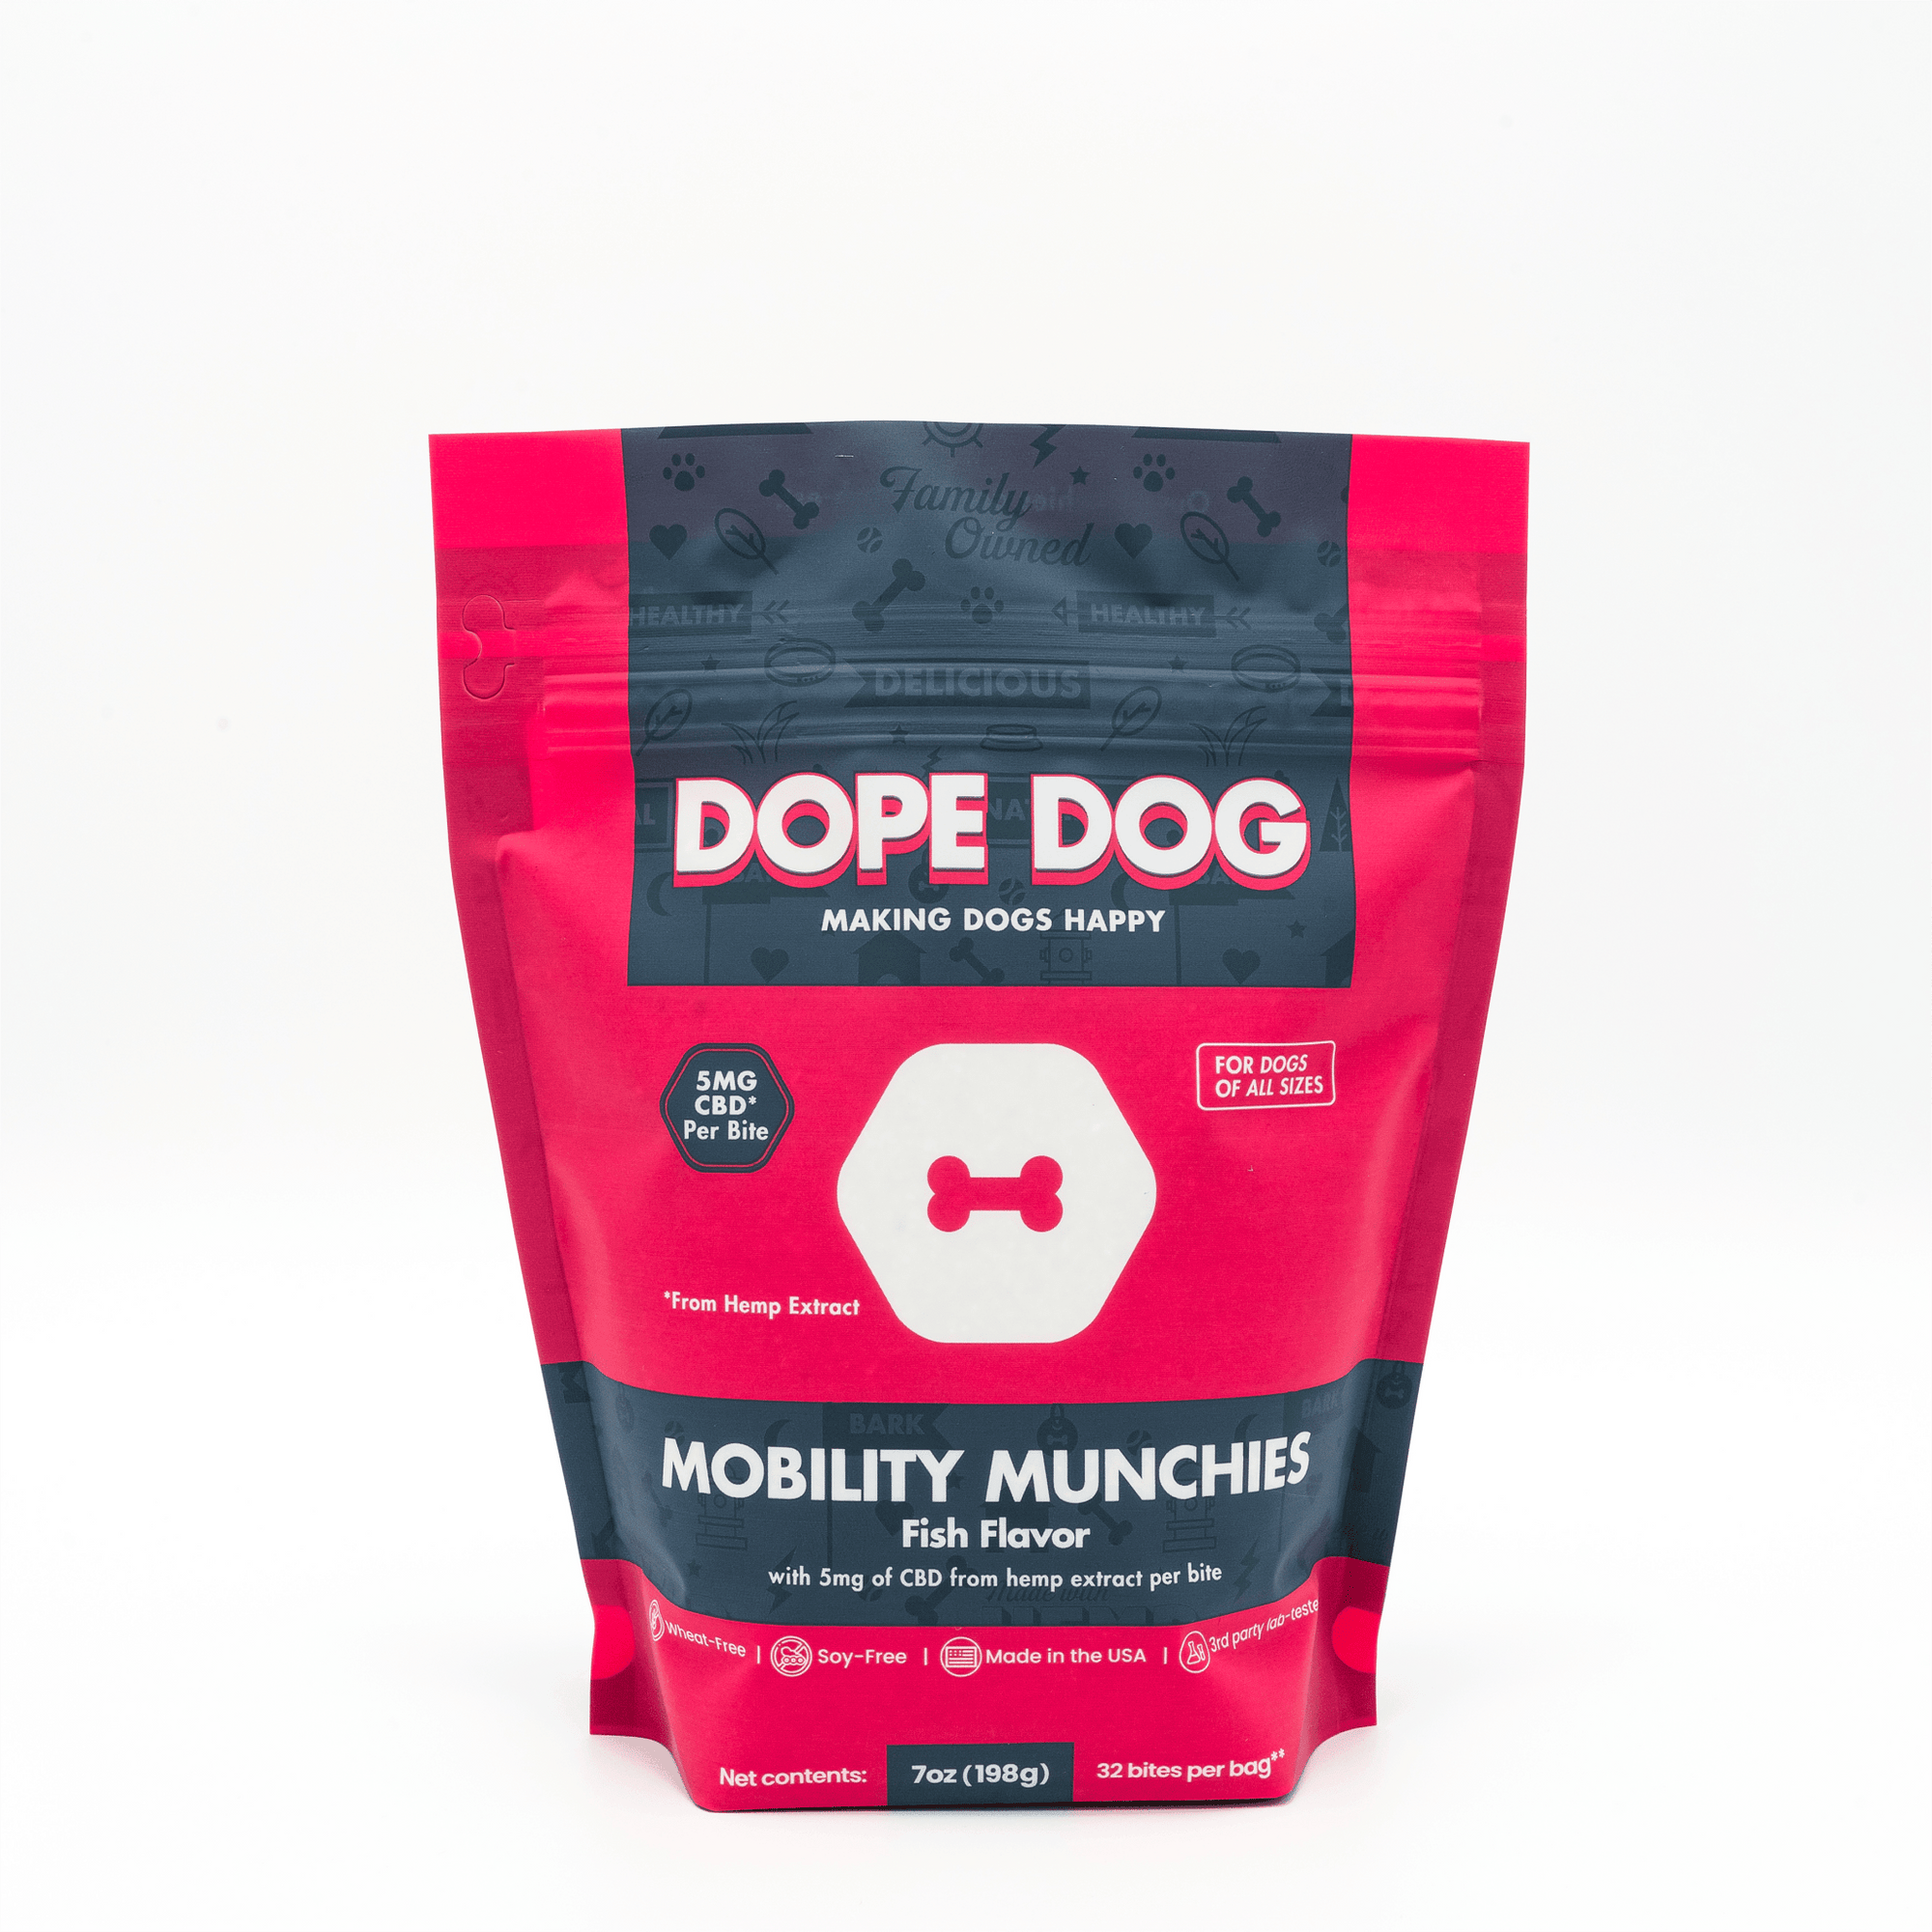 Mobility Munchies - Fish Flavor CBD Dog Treats - Dope Dog 